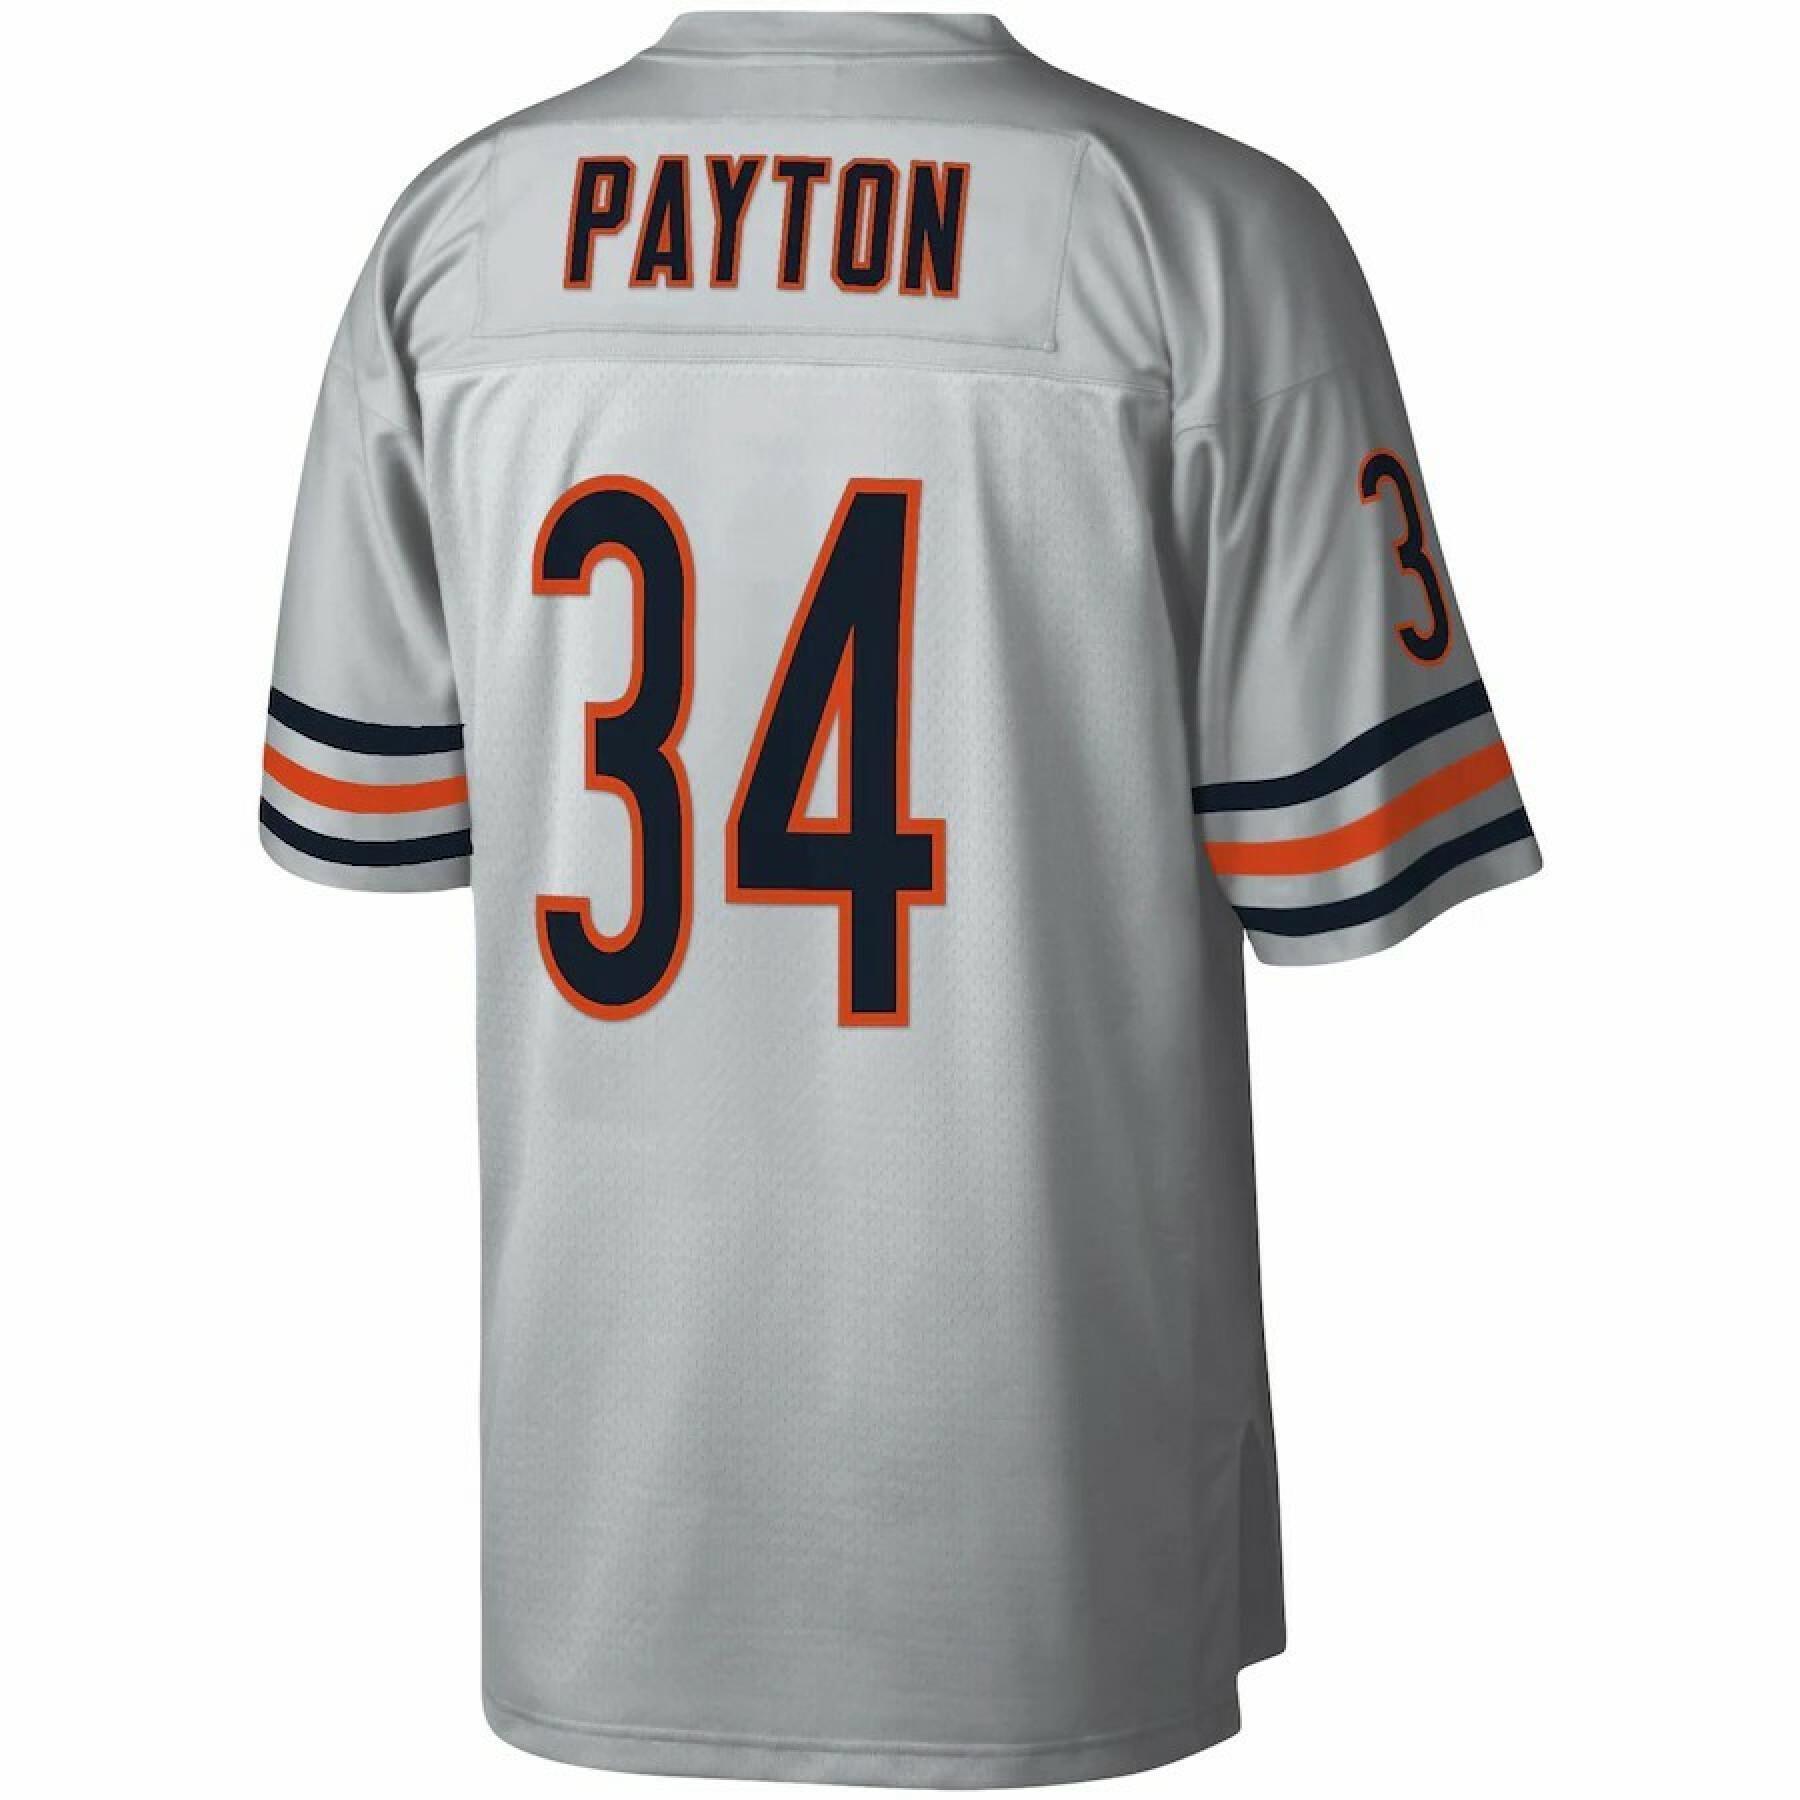 Camiseta de época Chicago Bears platinum Walter Payton